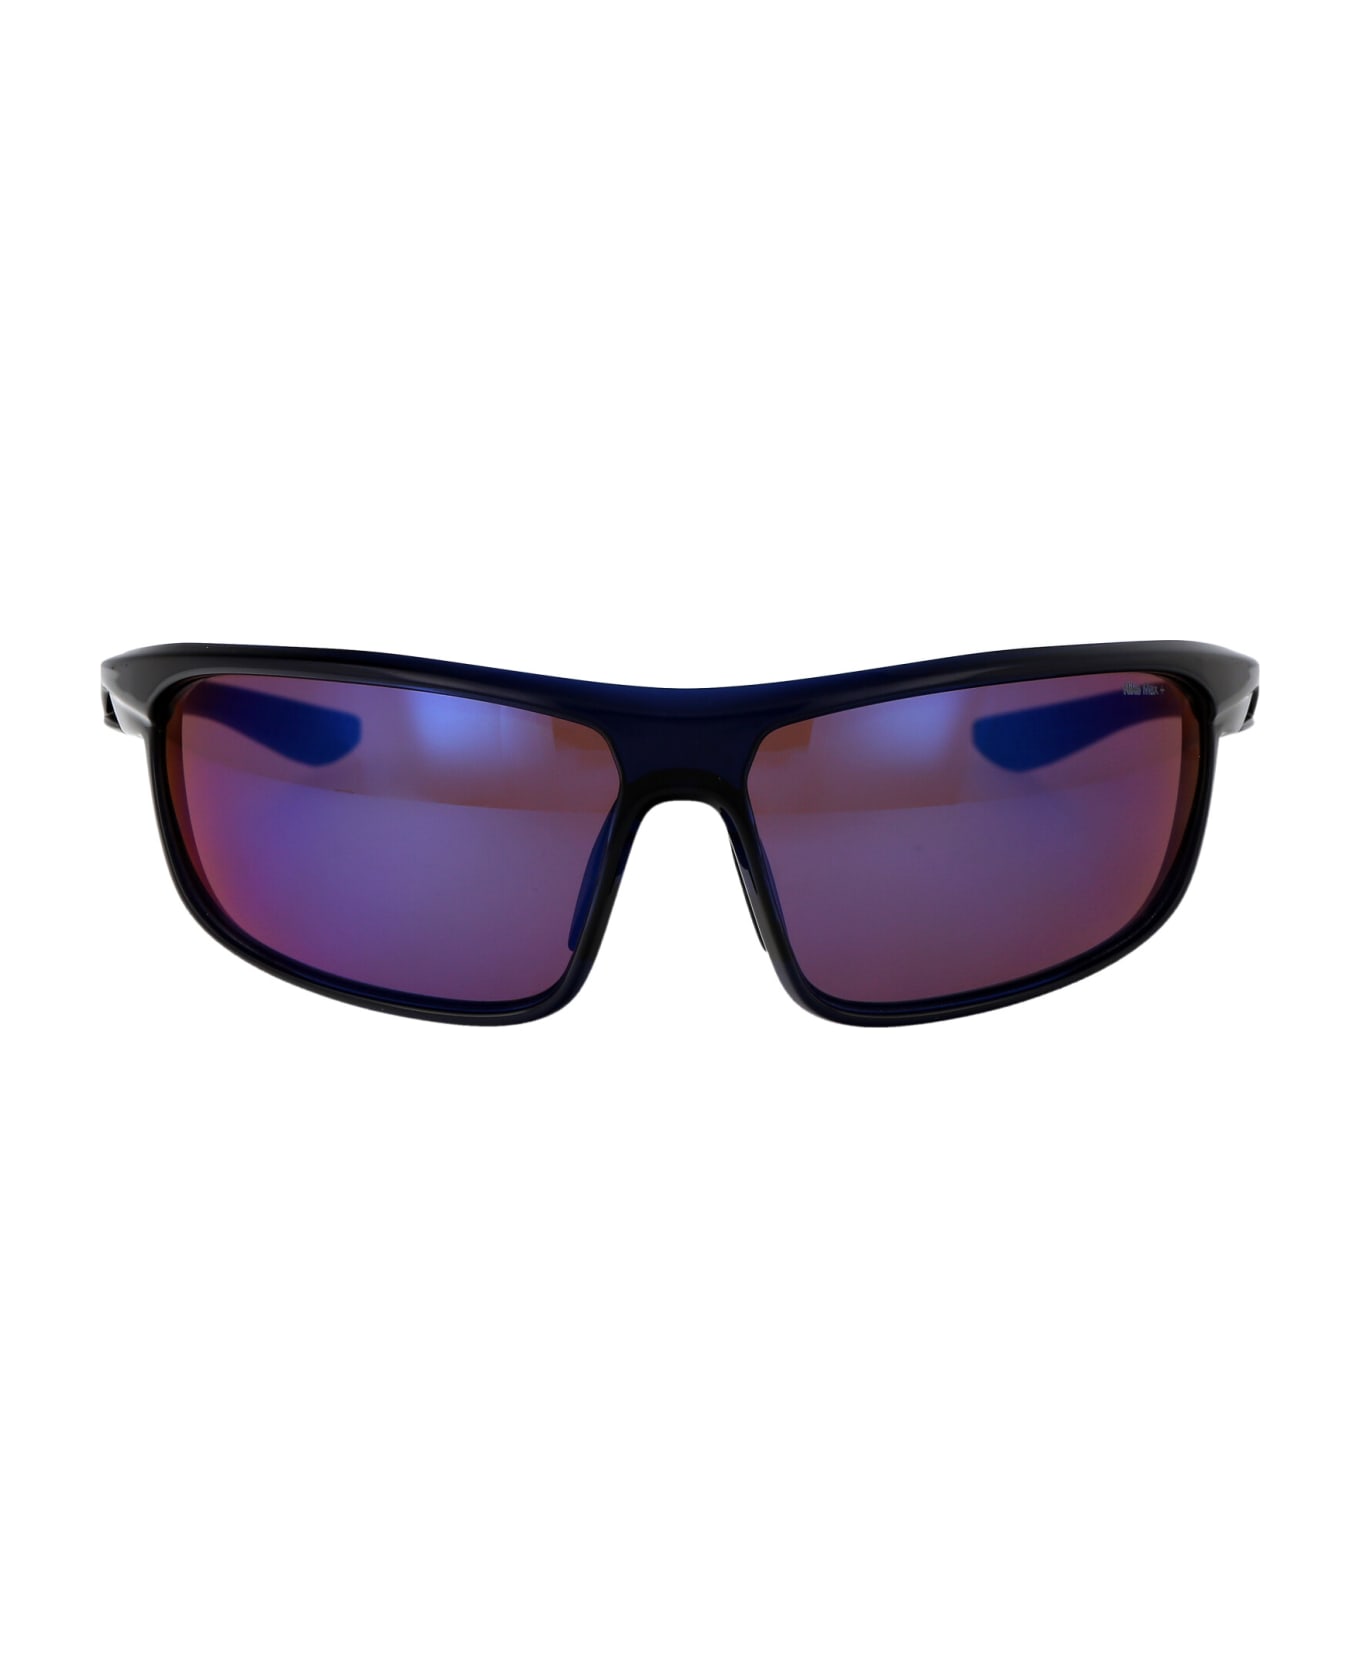 Nike Windtrack Run E Sunglasses - 410 ROAD W/ BLUE MIRROR MIDNIGHT NAVY サングラス